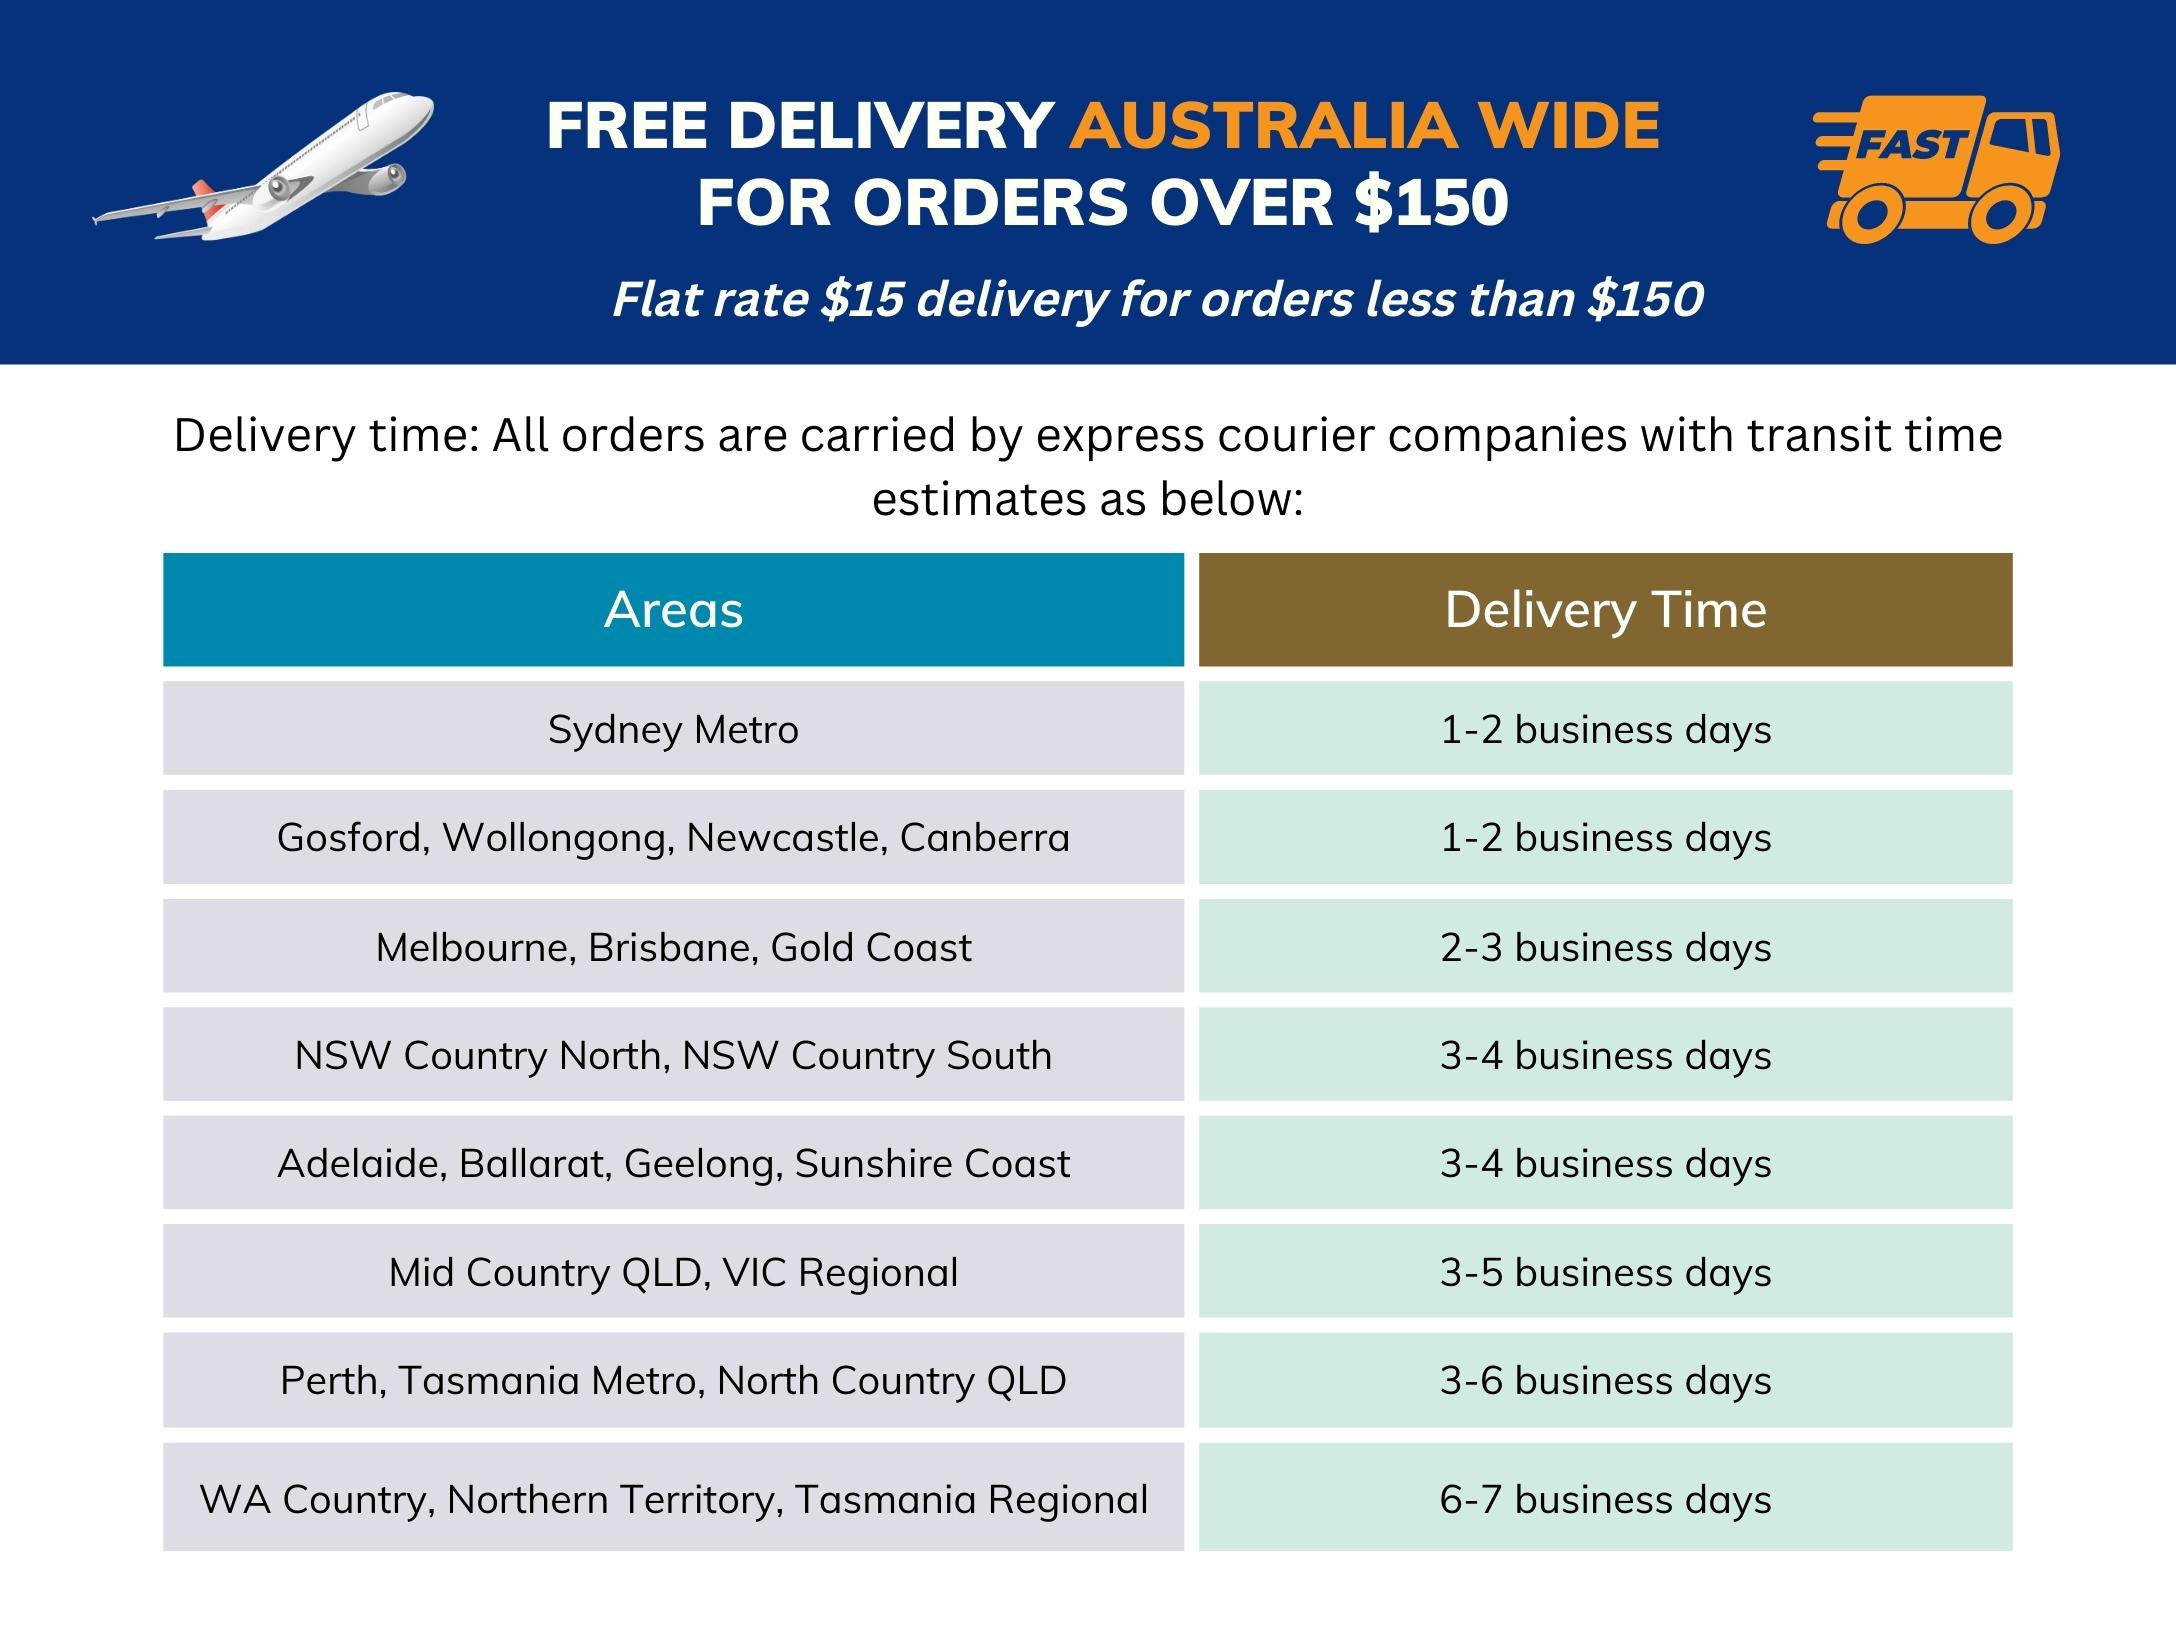 Free delivery Australia timeline